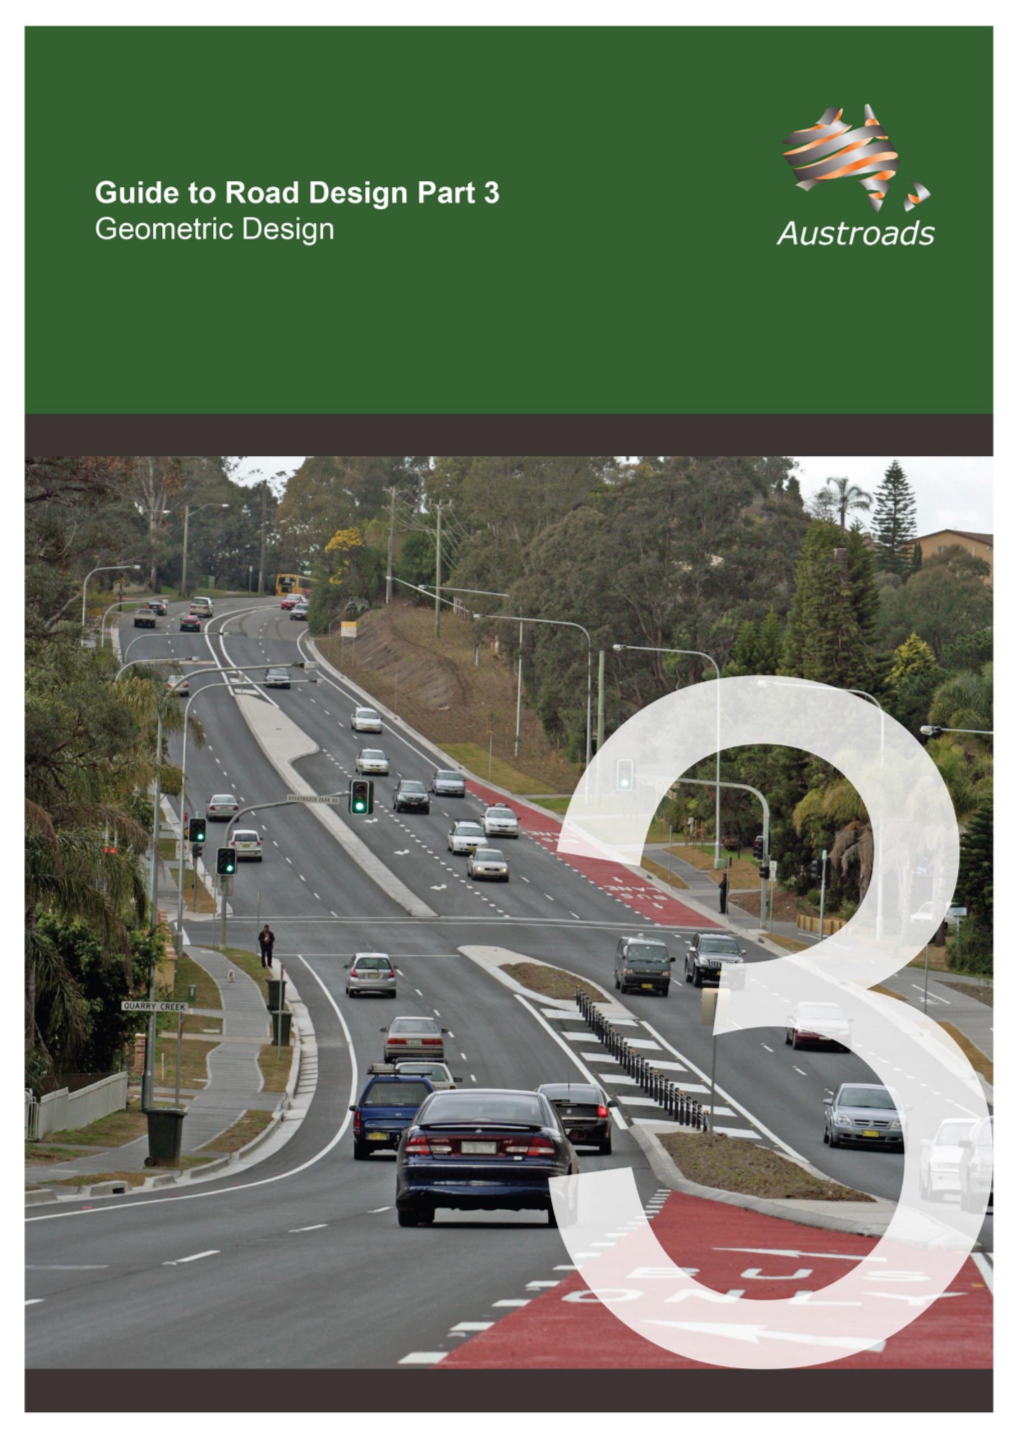 Guide to Road Design Part 3: Geometric Design